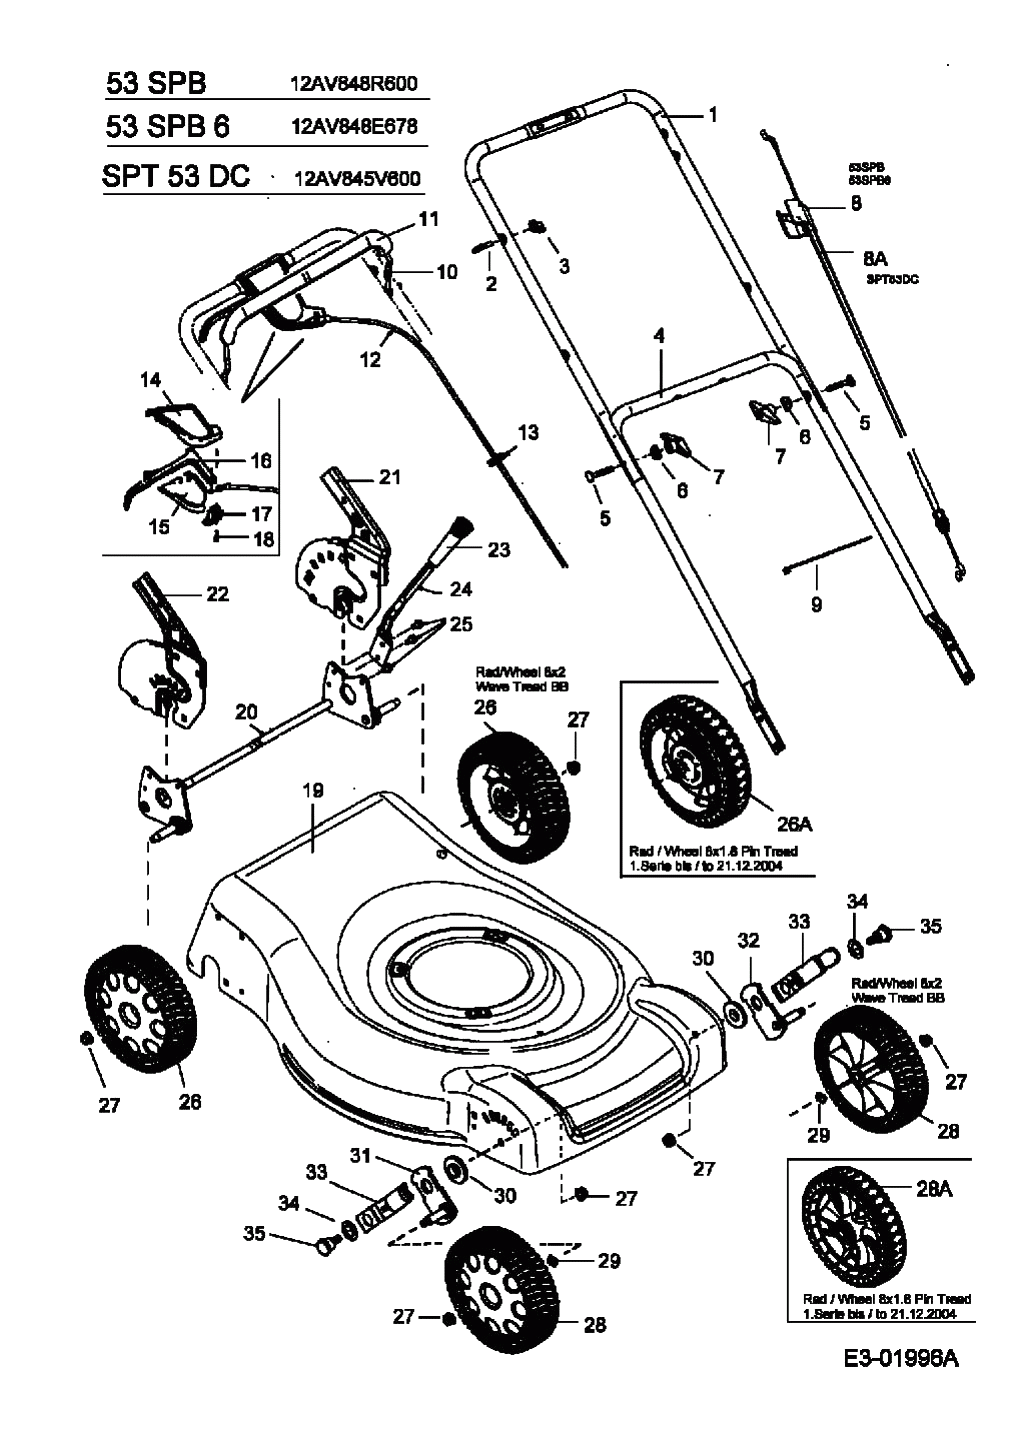 MTD Артикул 12AV845V600 (год выпуска 2005). Ручка, колеса, регулятор высоты реза